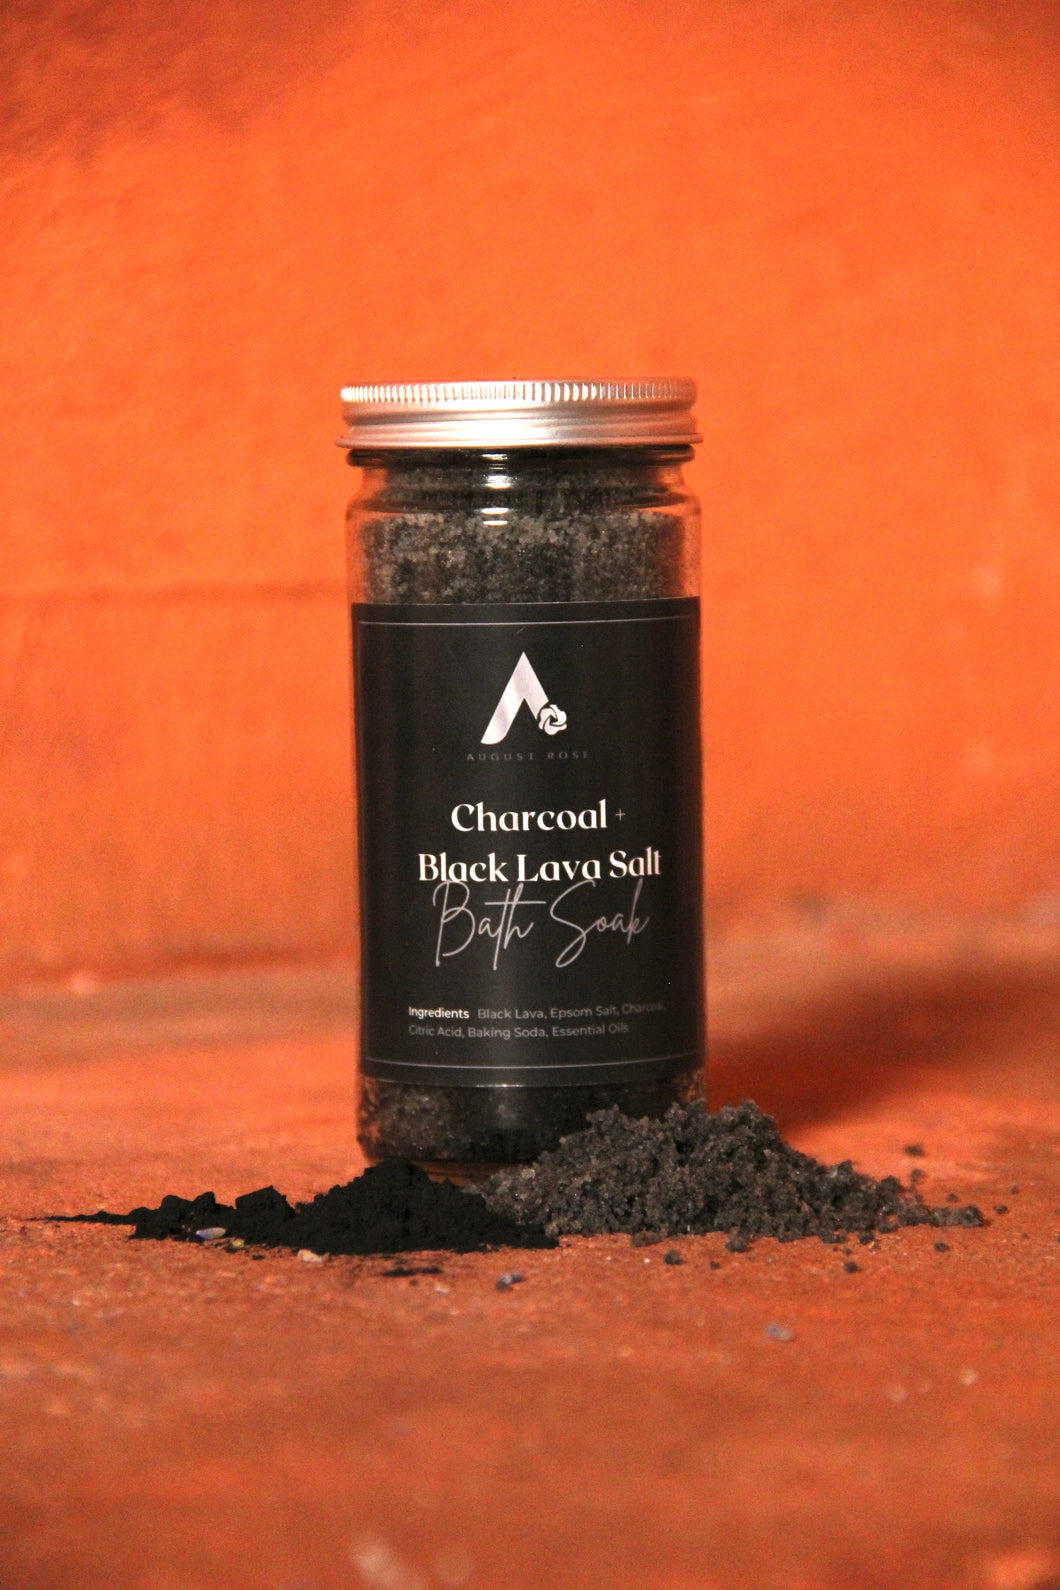 Charcoal + Black Lava Salt Bath Soak